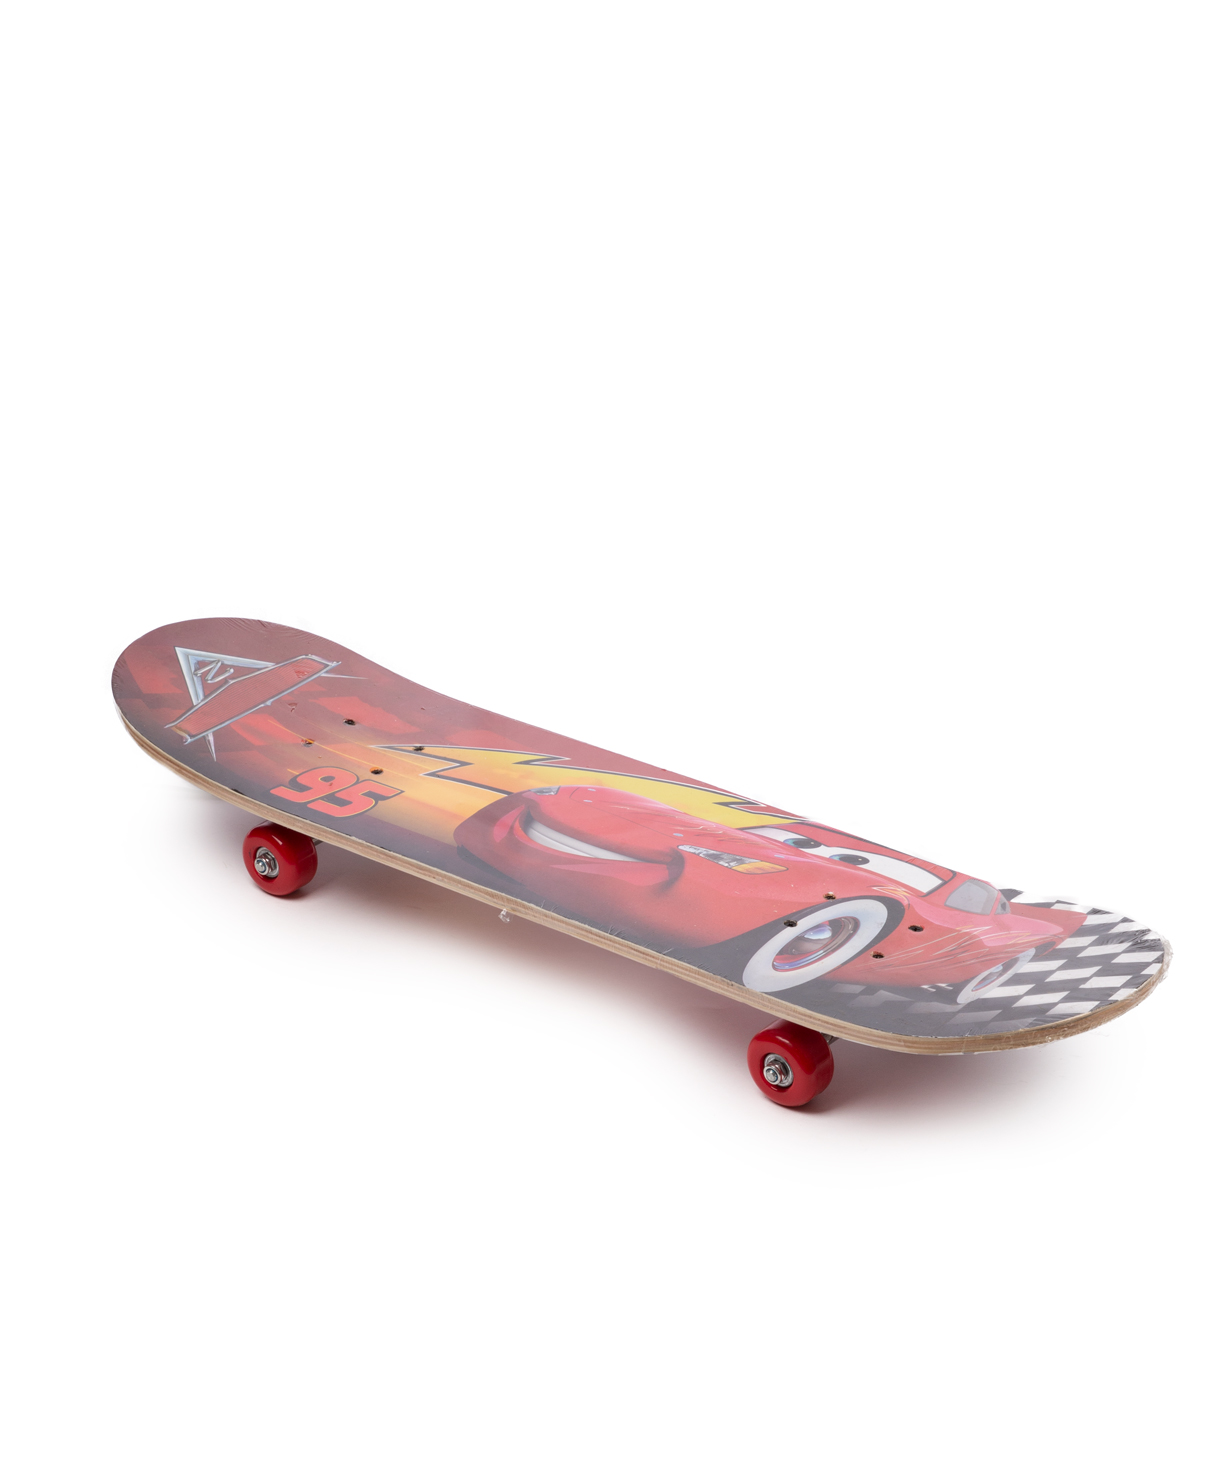 Skateboard №42